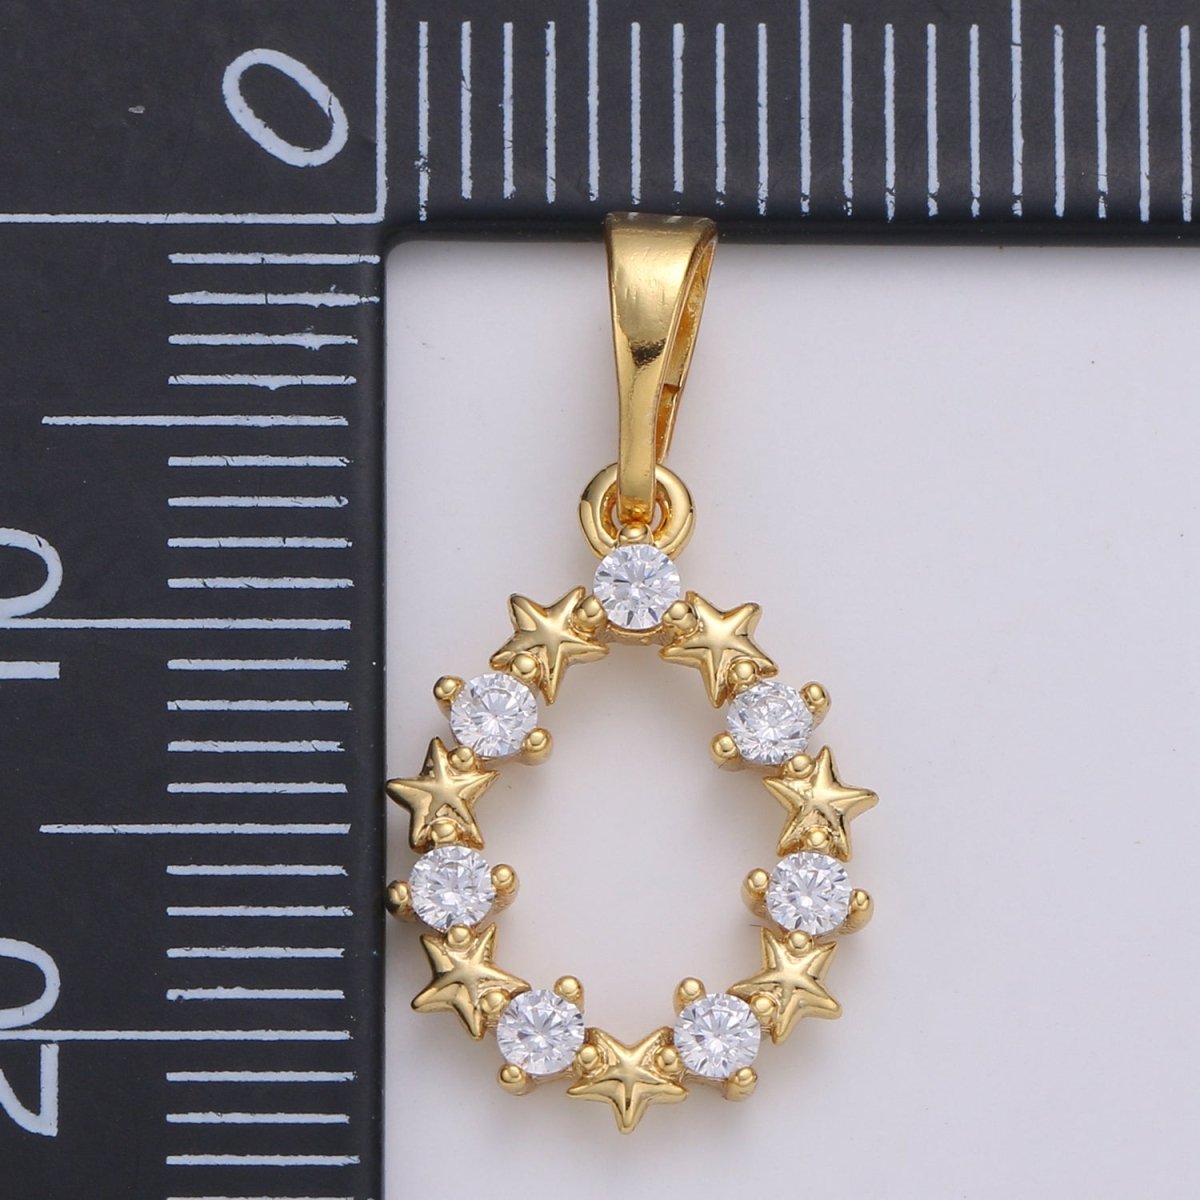 DEL- 24K Gold Filled Dainty Star Tear Drop Oval Shape Cubic Zirconia Necklace Pendant Bracelet Earring Charm for Jewelry Making 22mmx11.5mm - DLUXCA